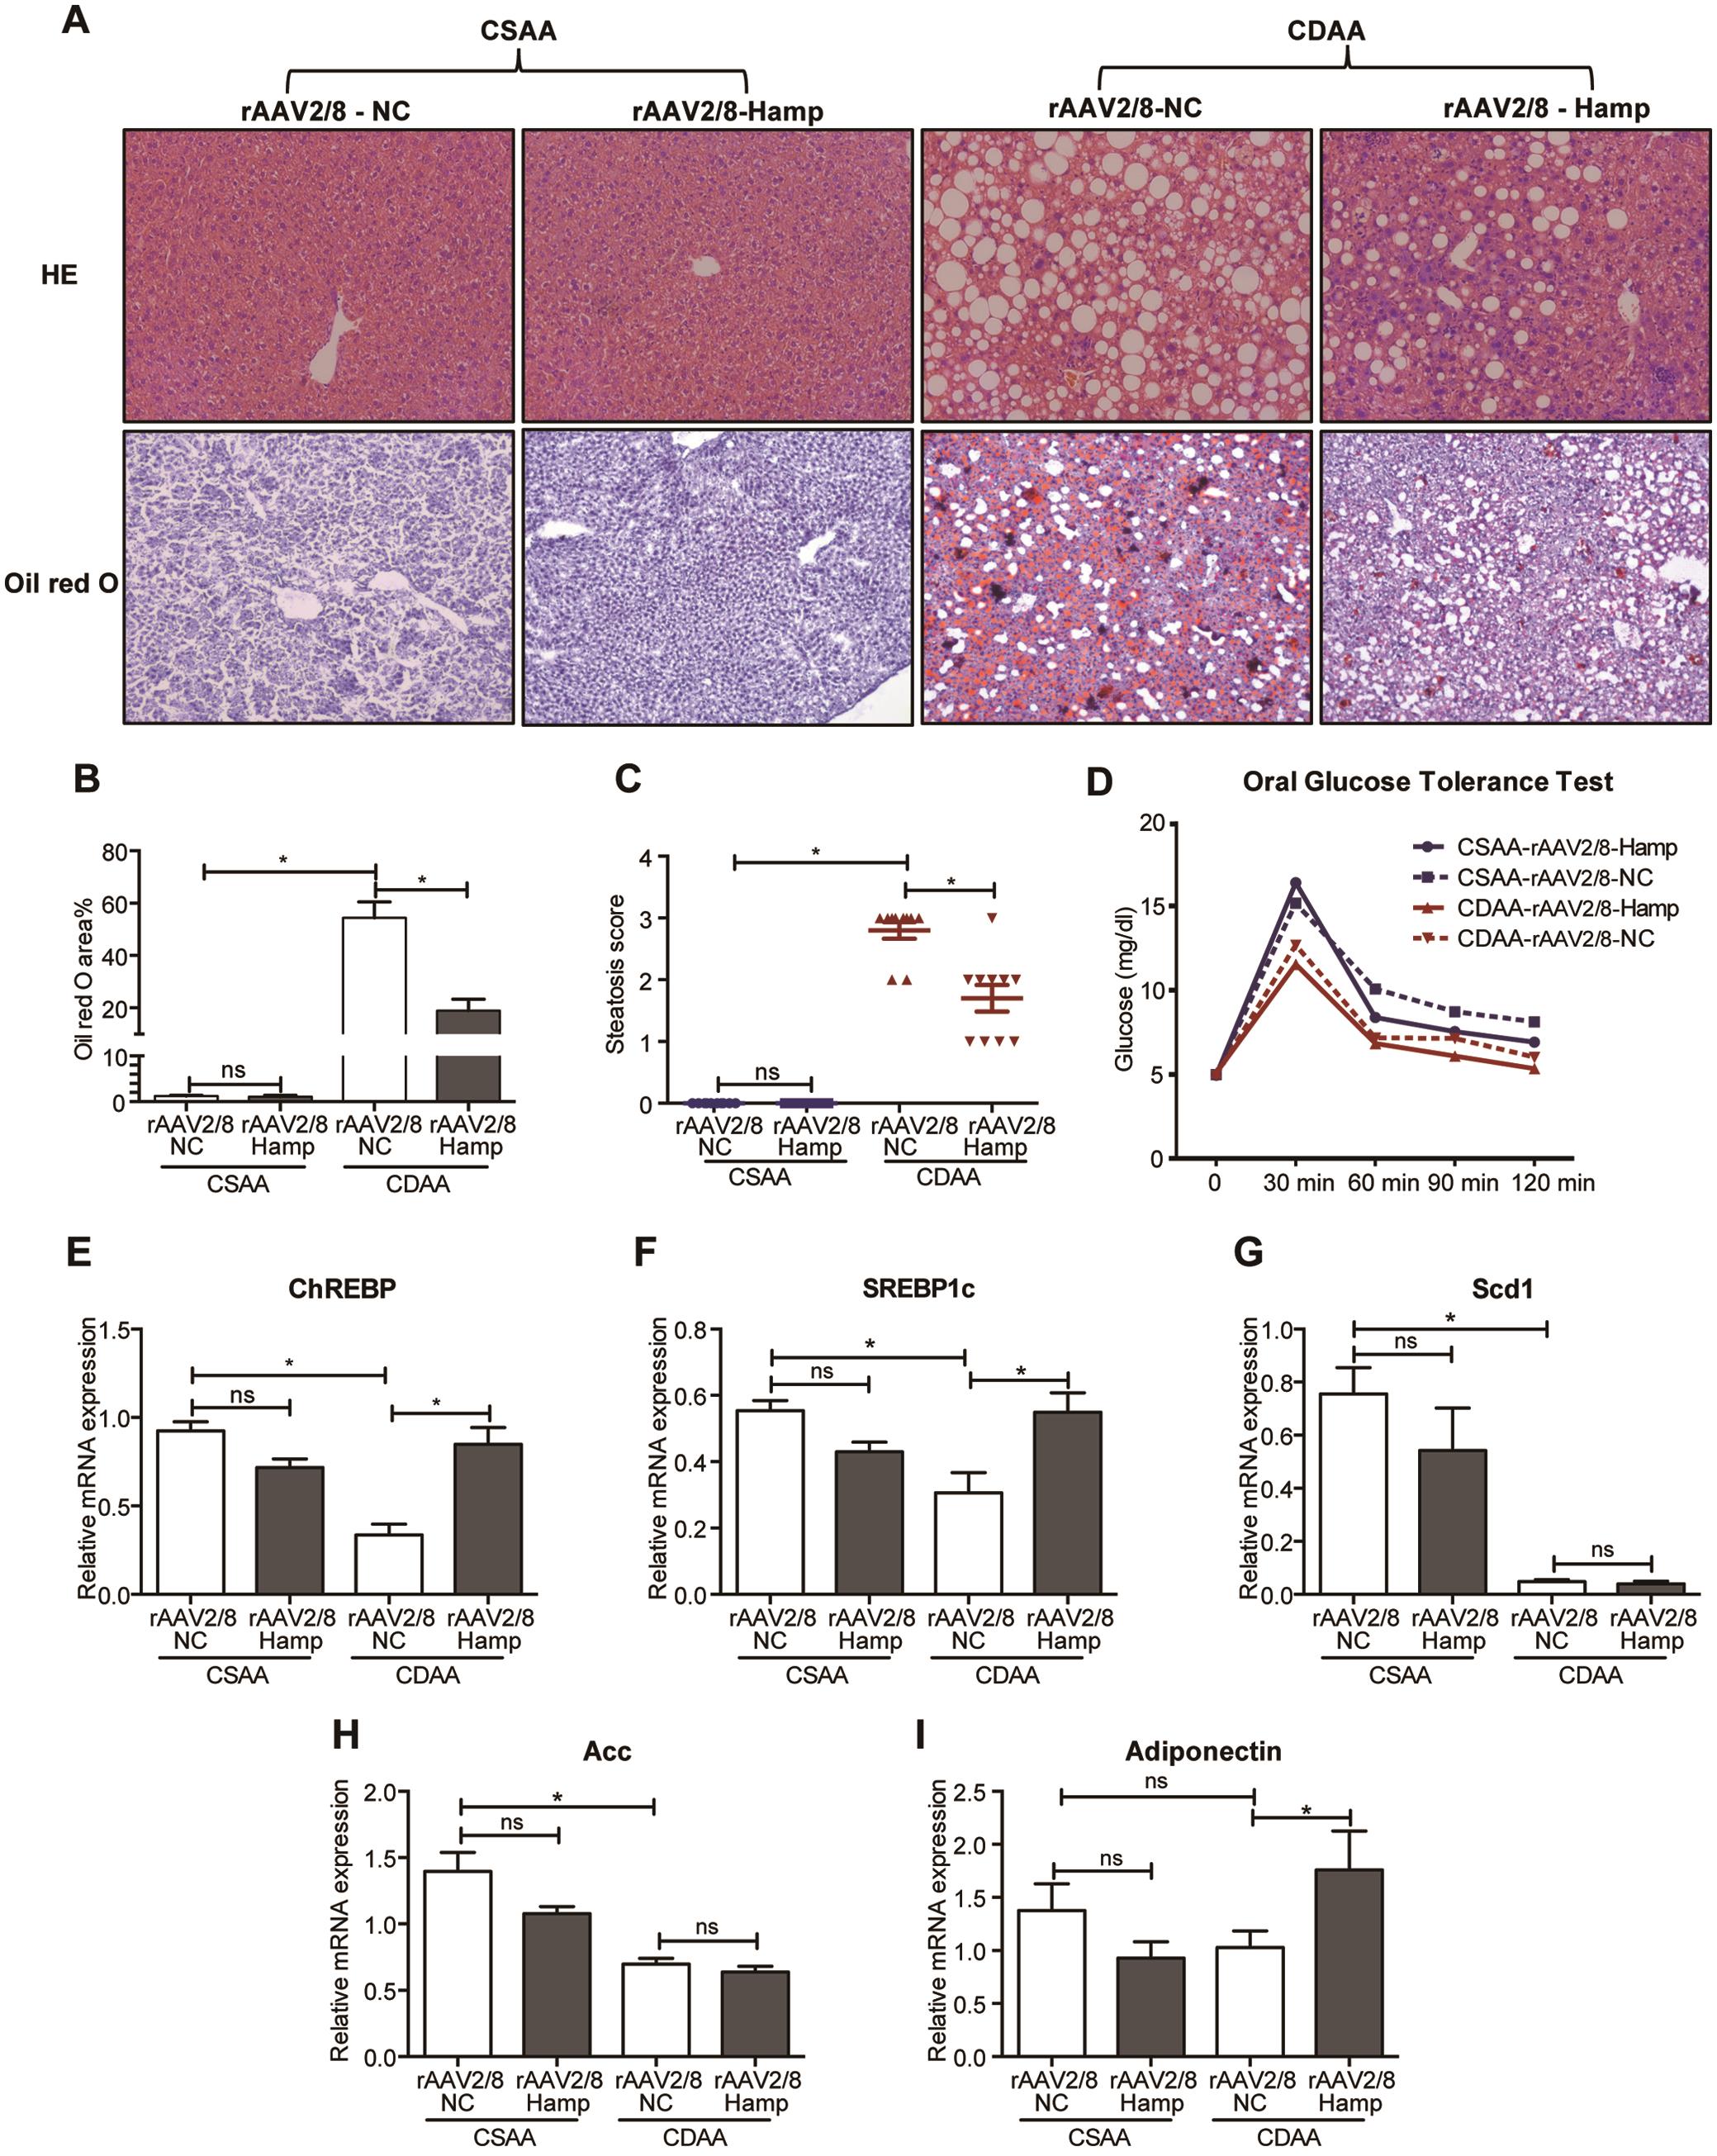 rAAV2/8-Hamp treatment showed anti-steatotic properties in CDAA-fed mice.